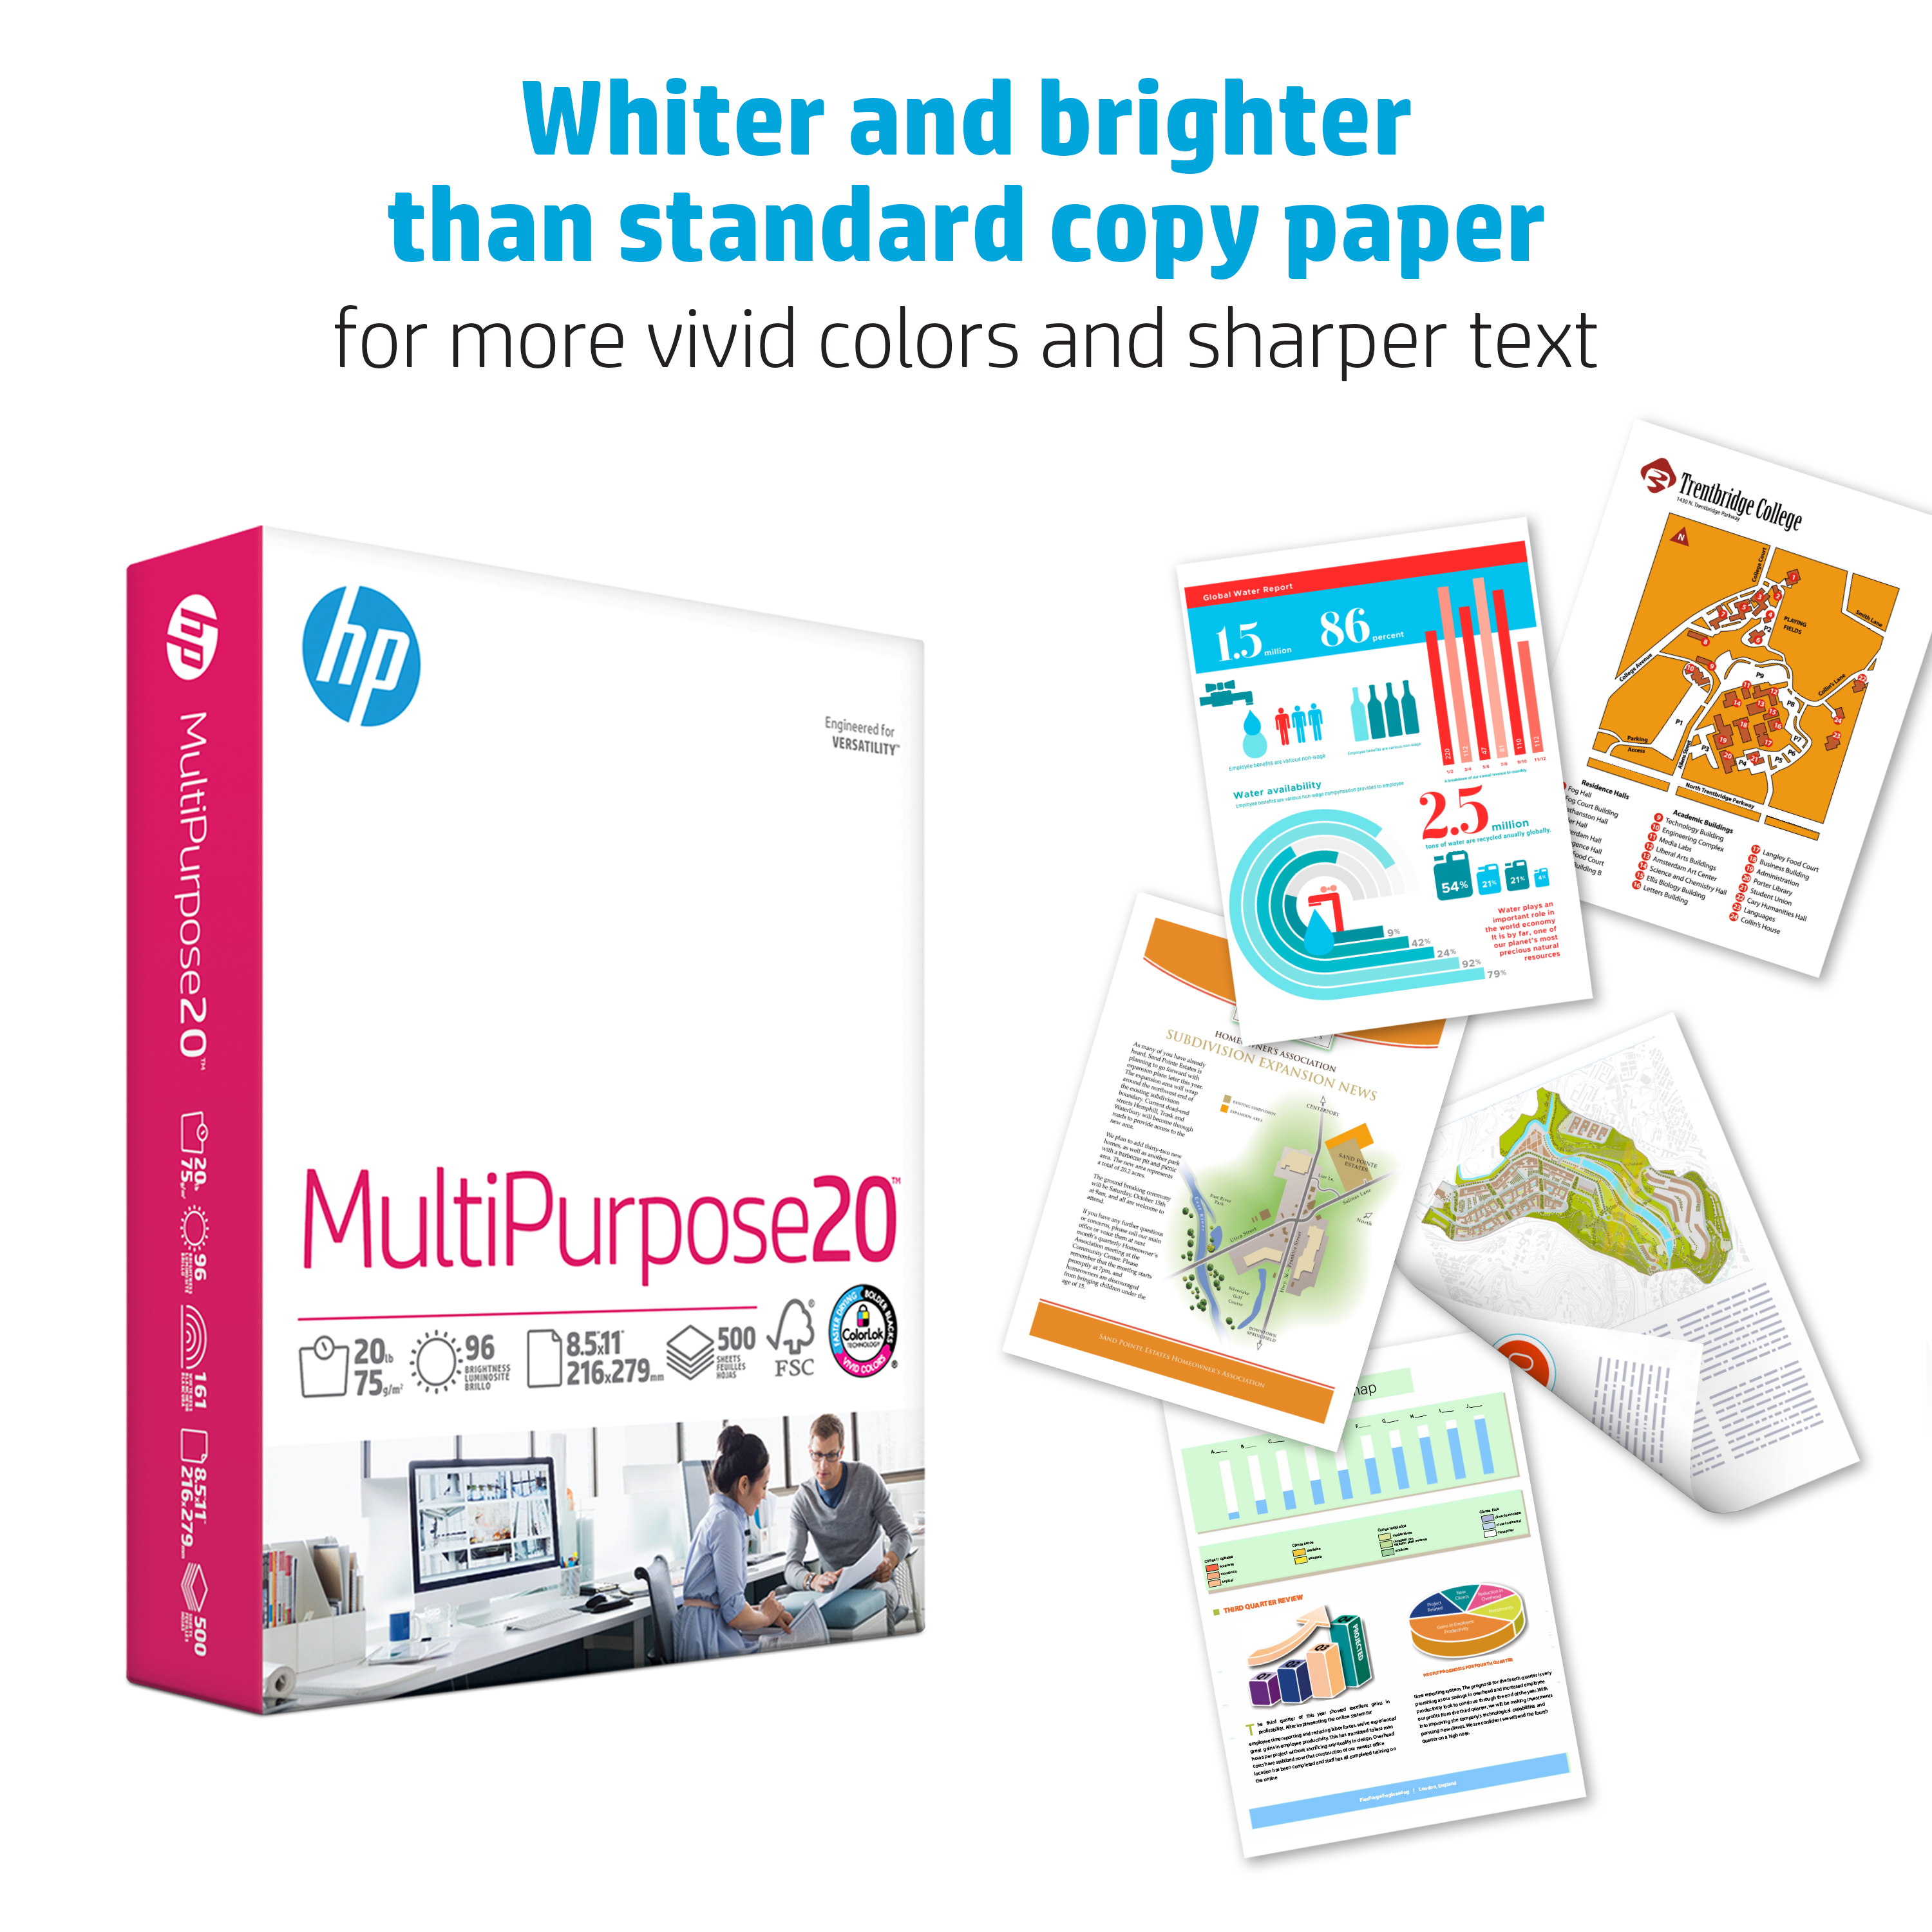 HP Multipurpose20, 20lb, 8.5 x 11, 500 Sheets - image 4 of 9